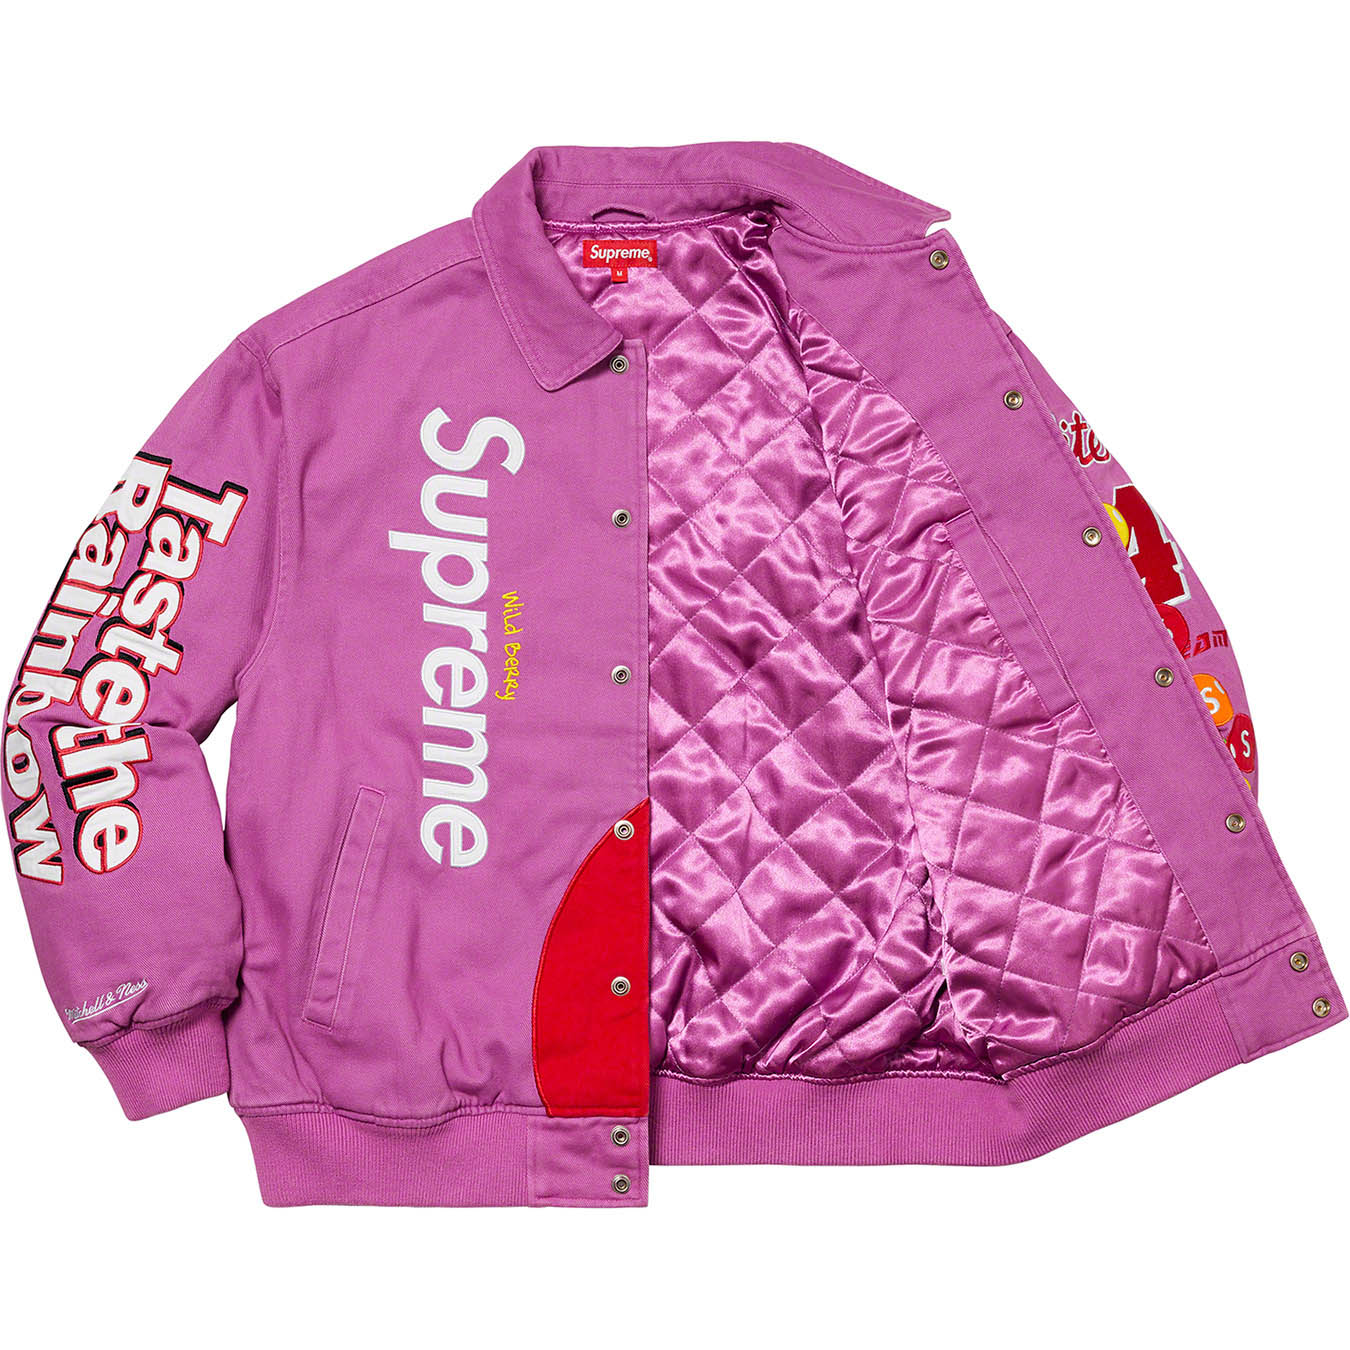 Supreme®/Skittles®/Mitchell & Ness® Varsity Jacket